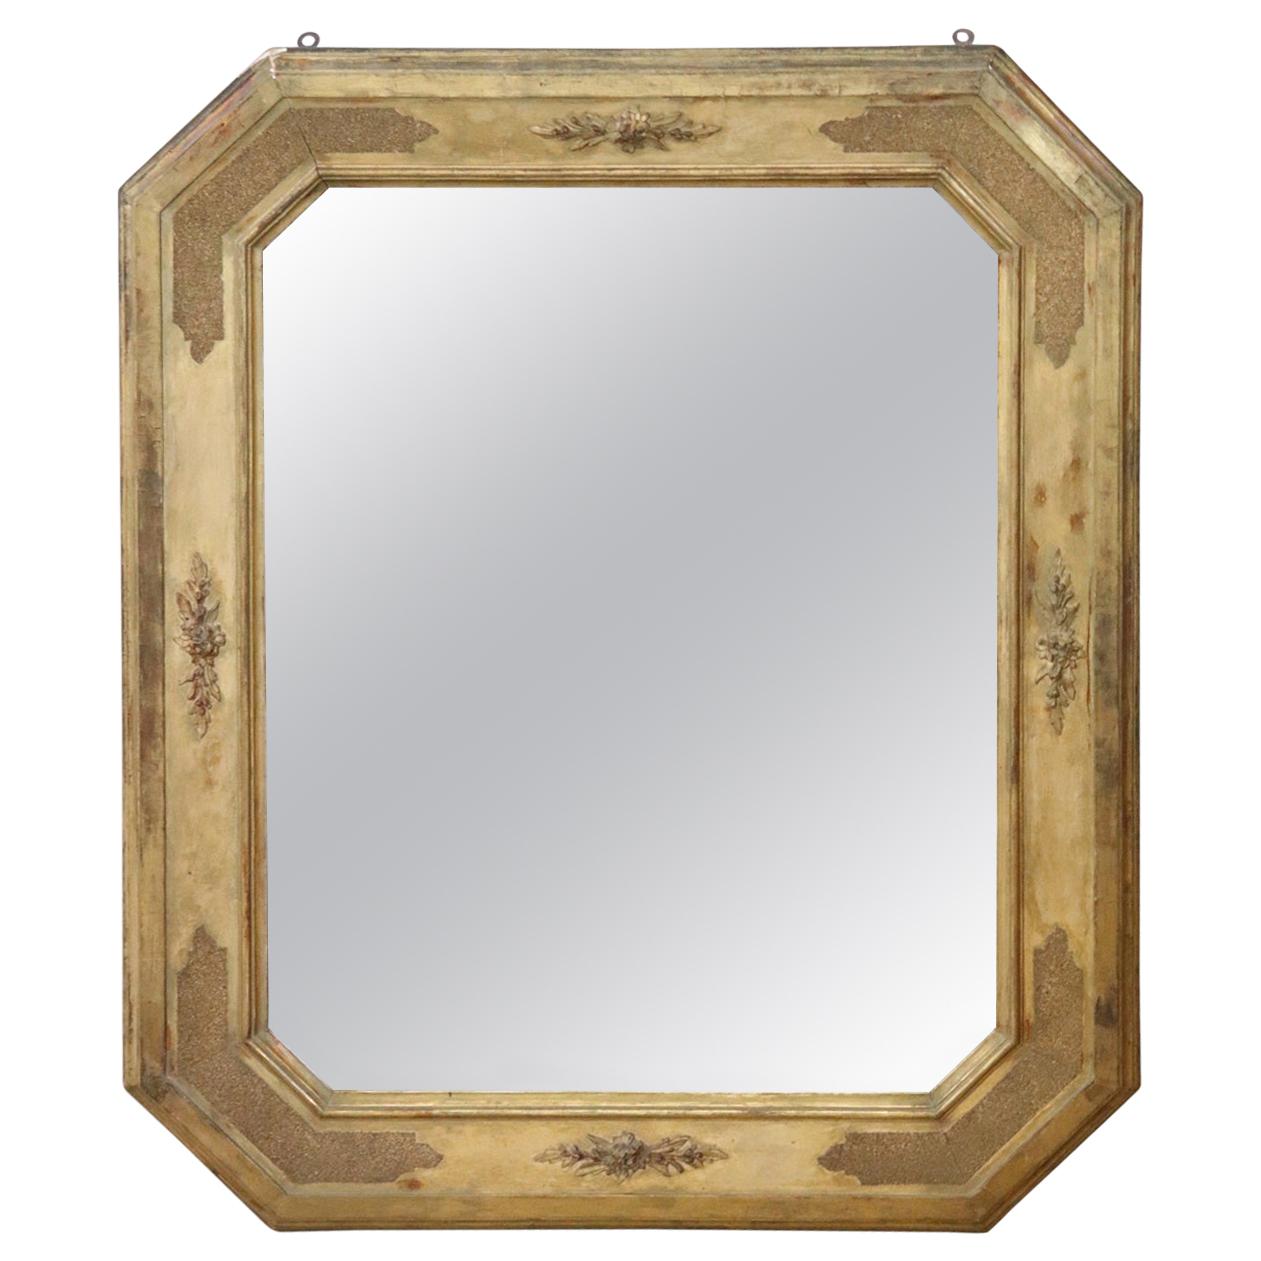 19th Century Italian Gilded Wood Wall Mirror with Original Mercury Mirror